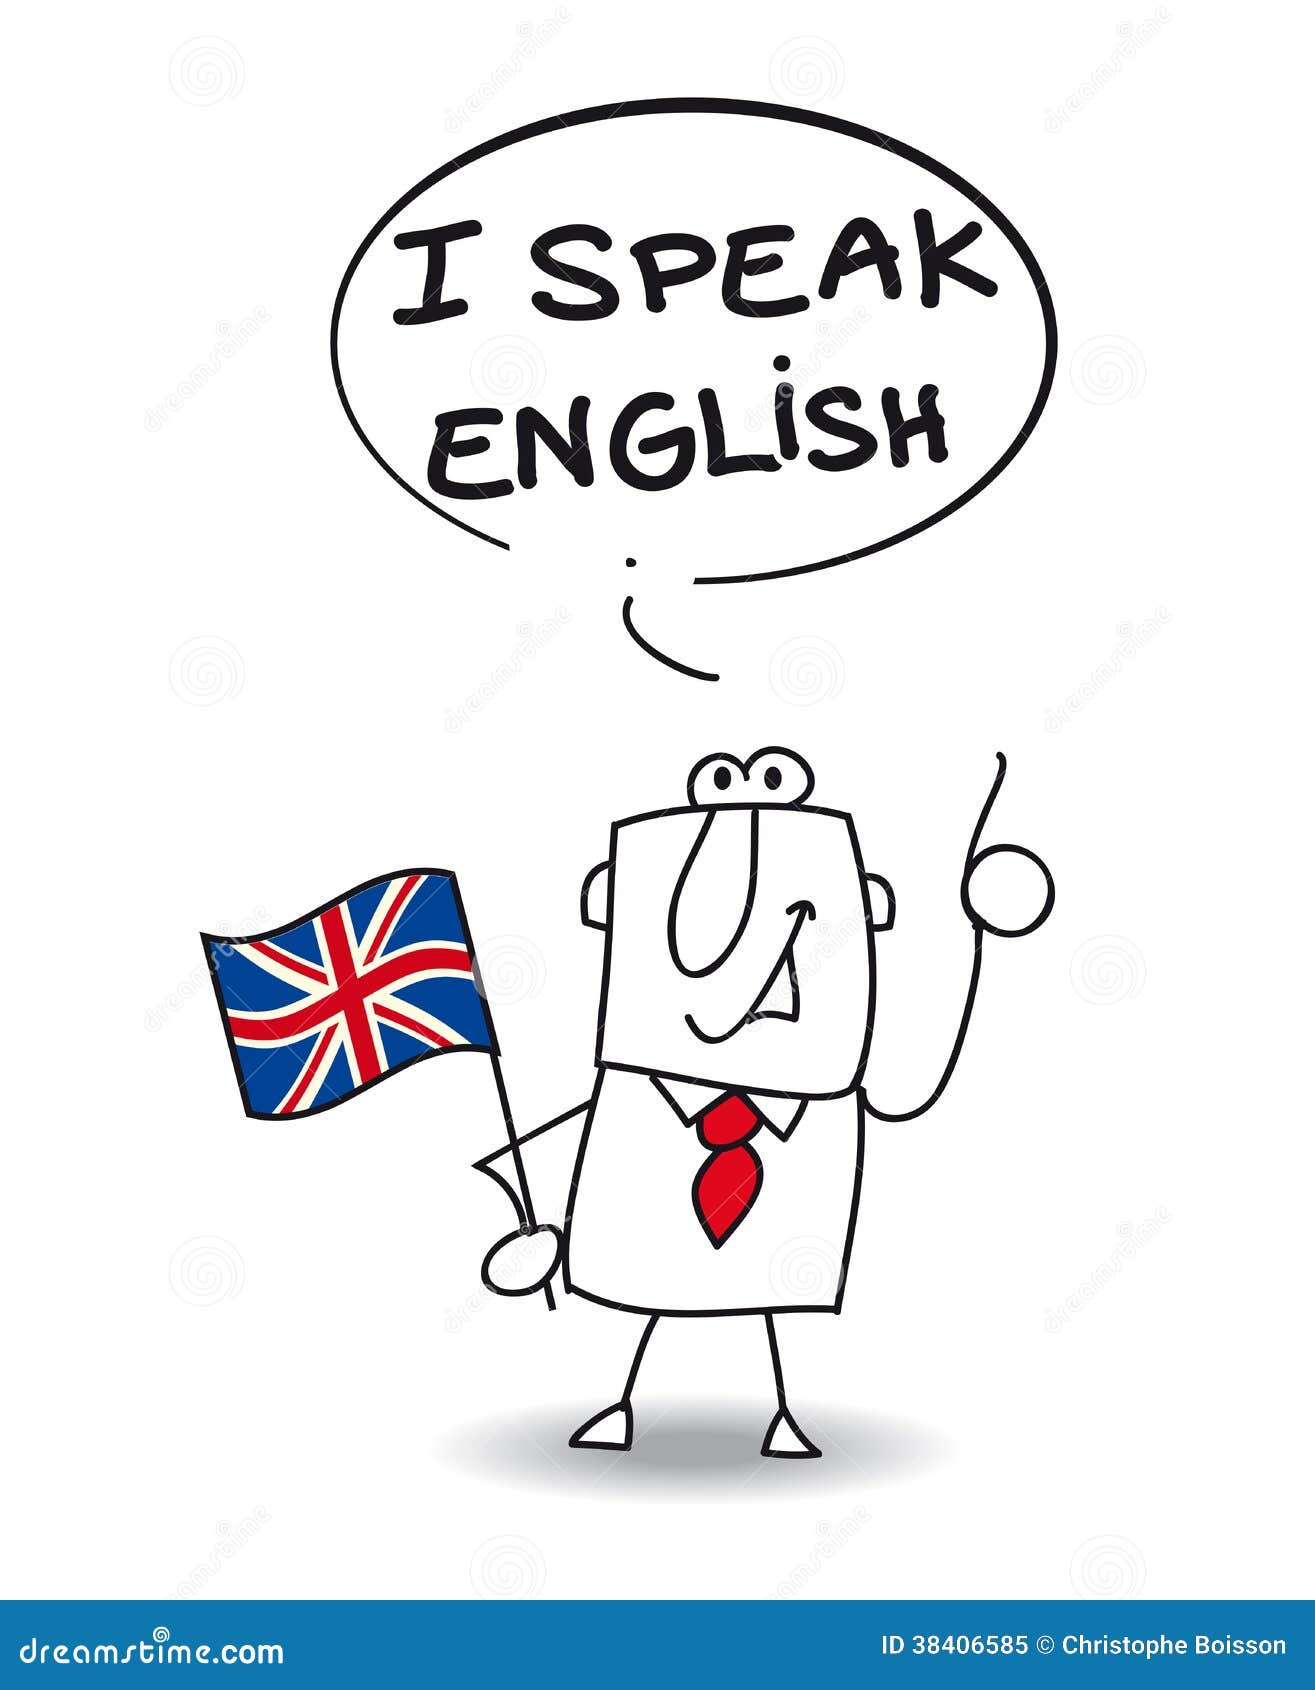 Do You Speak English - Poster Vector Illustration | CartoonDealer.com